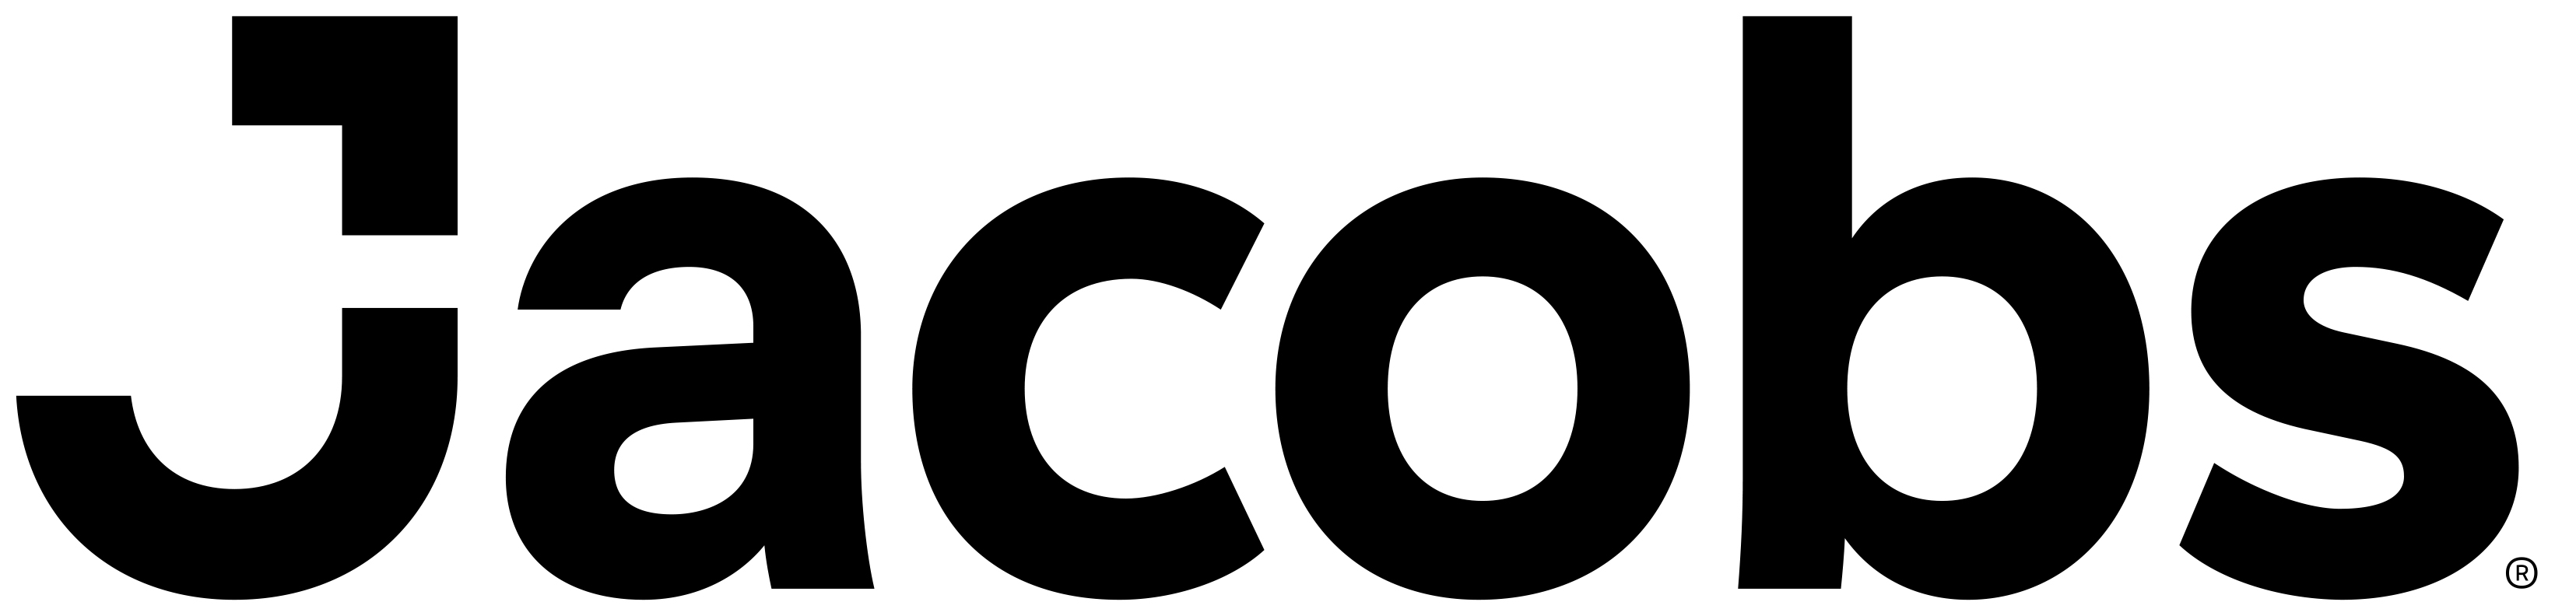 Jacobs logo rgb black (2)